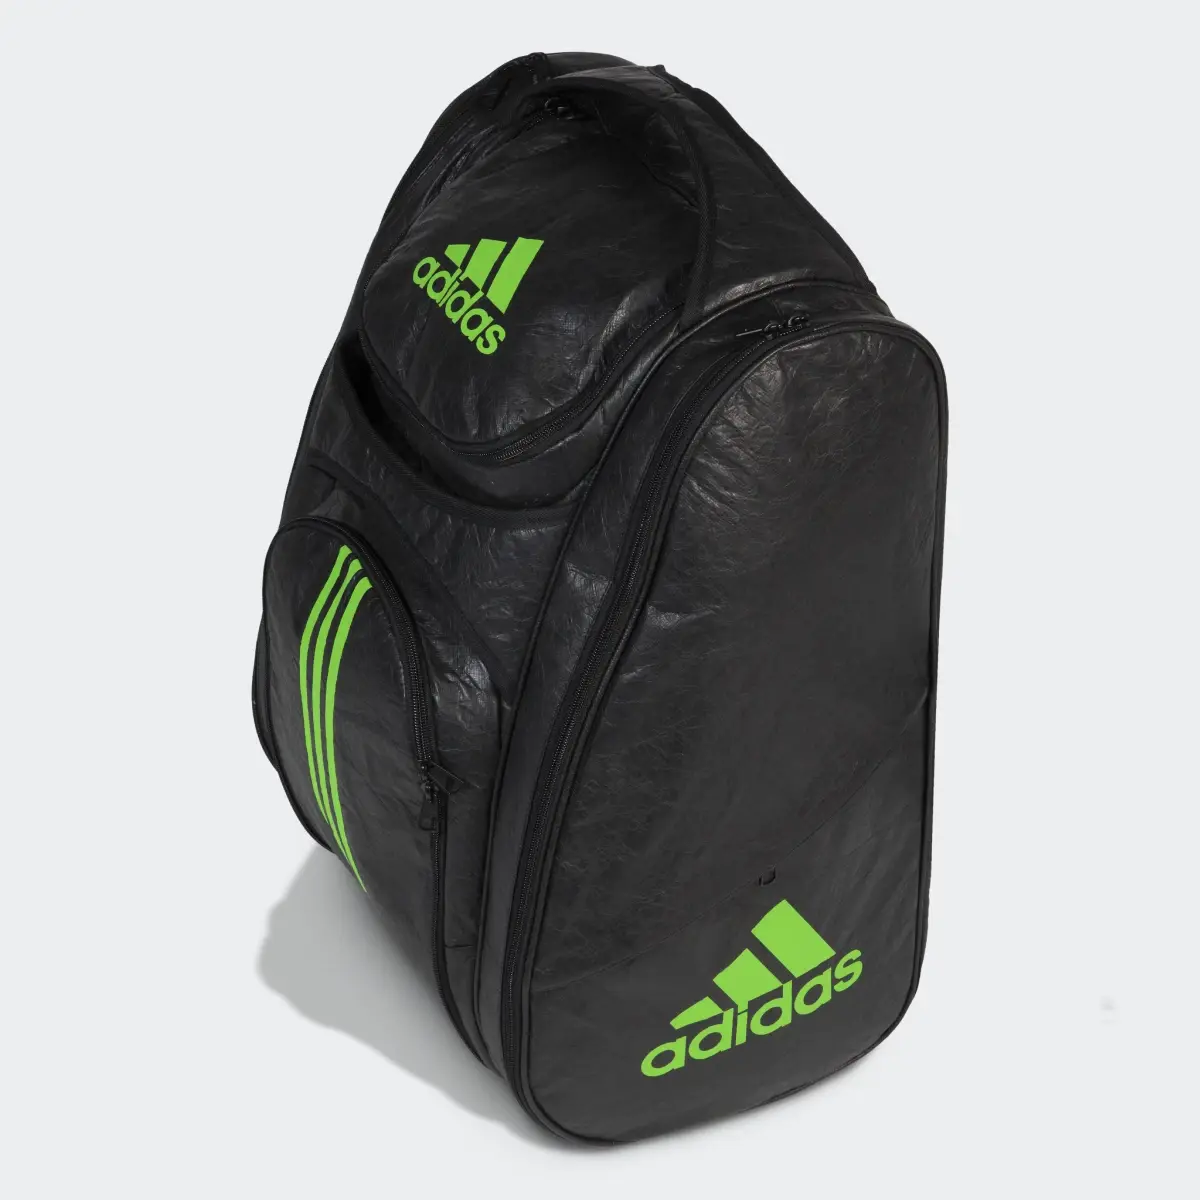 Adidas Multigame Racket Bag. 2